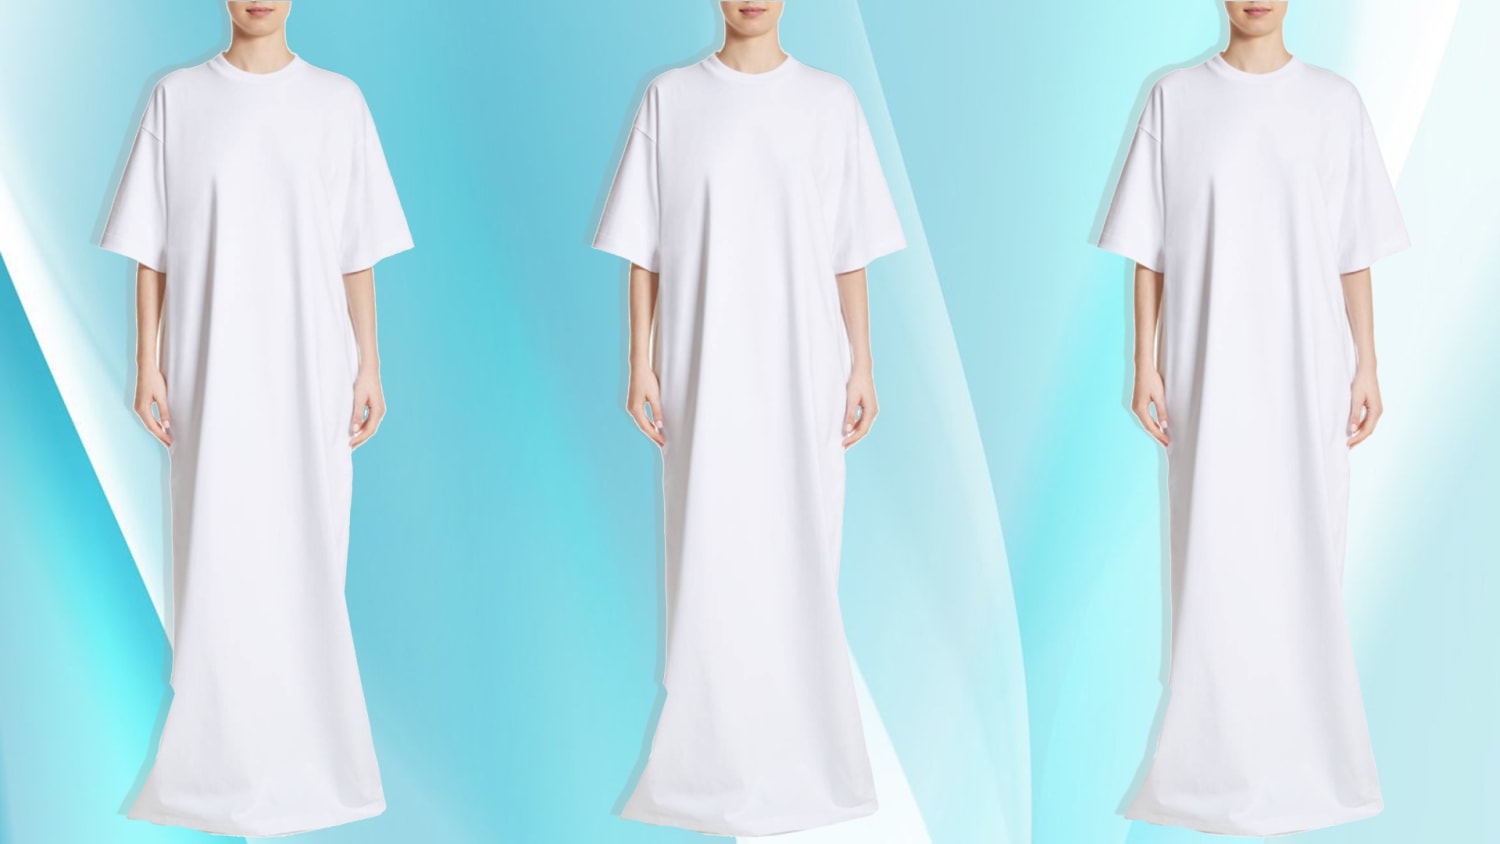 Vetements T-shirt dress that cost $1,450 goes viral